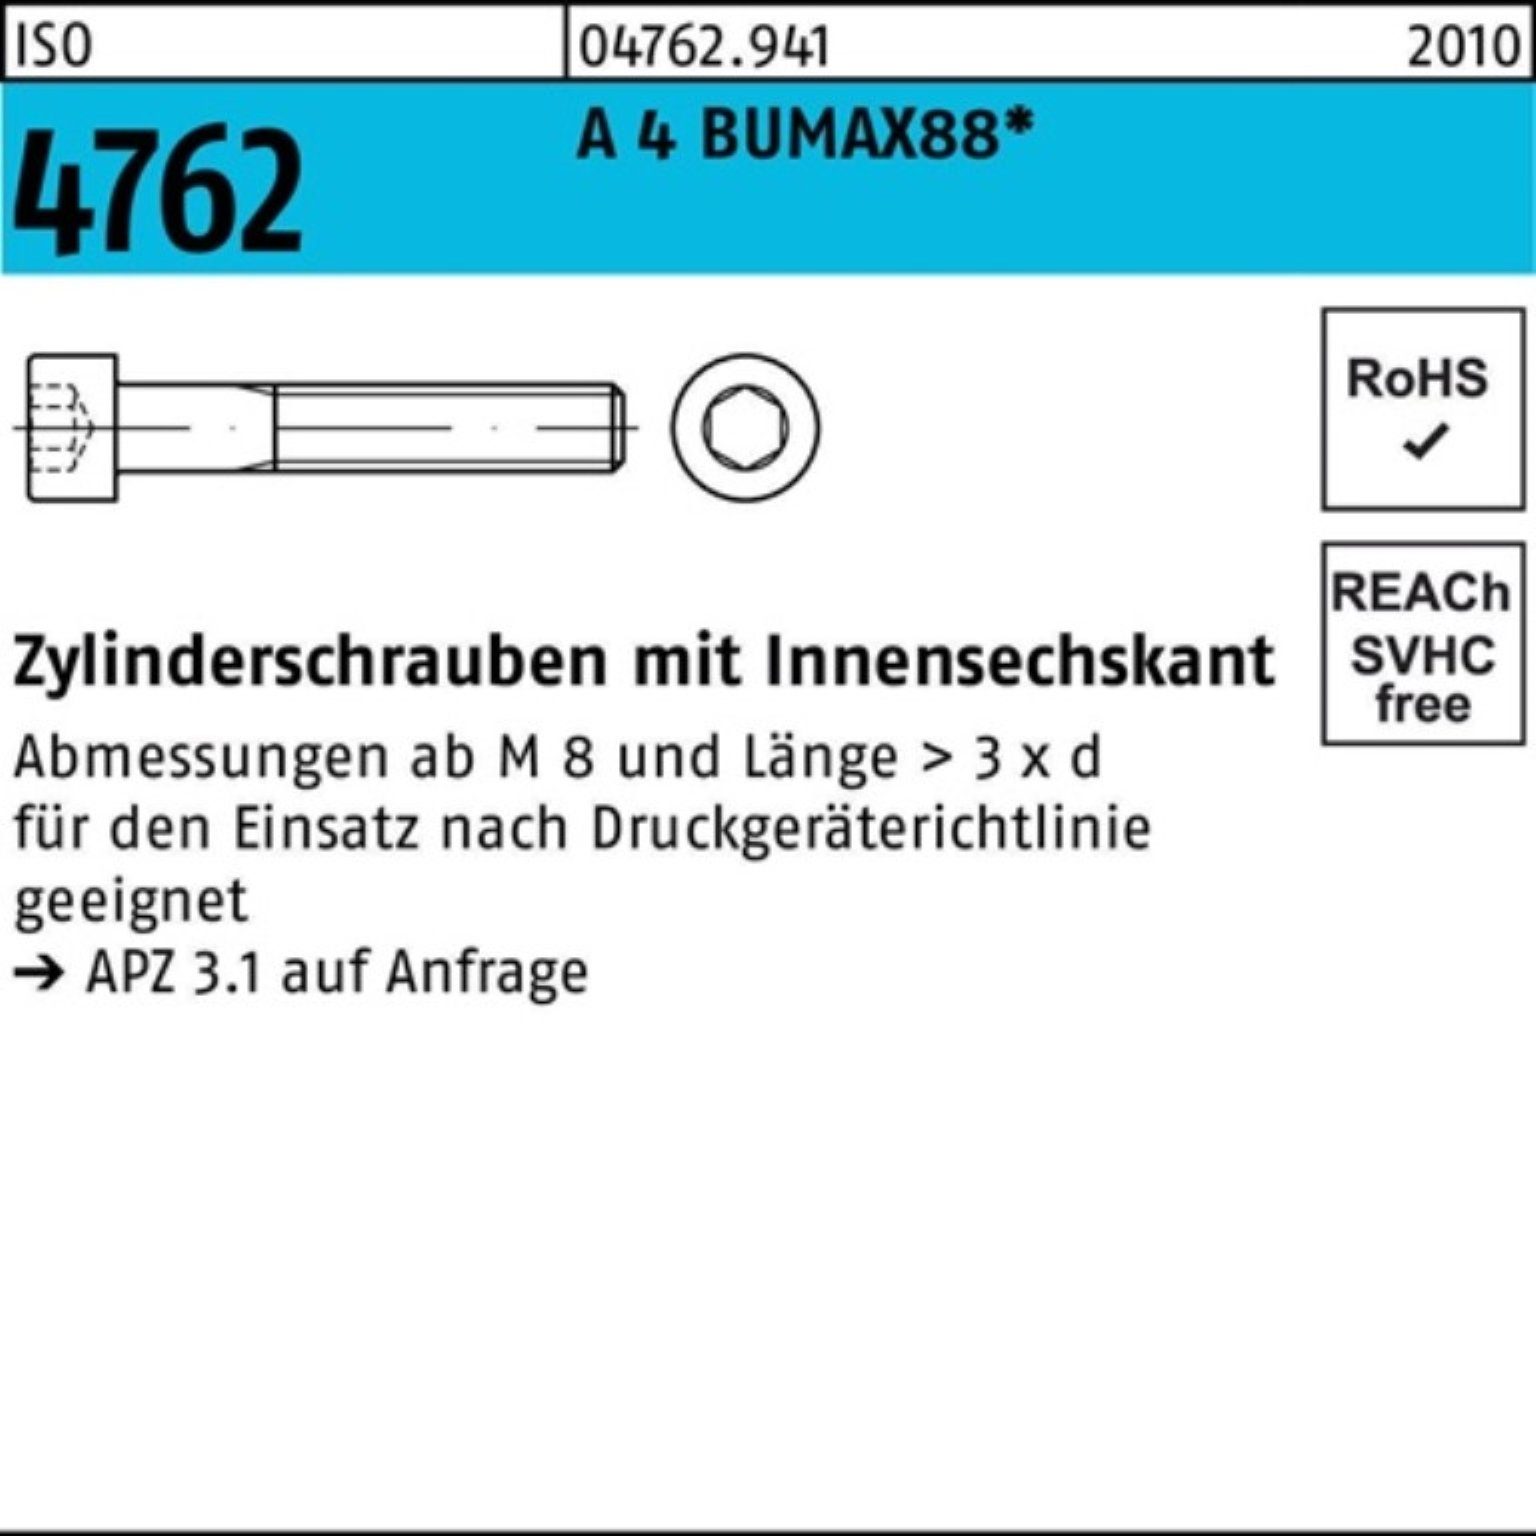 Bufab Zylinderschraube 100er Pack Zylinderschraube ISO 4762 Innen-6kt M16x 45 A 4 BUMAX88 25